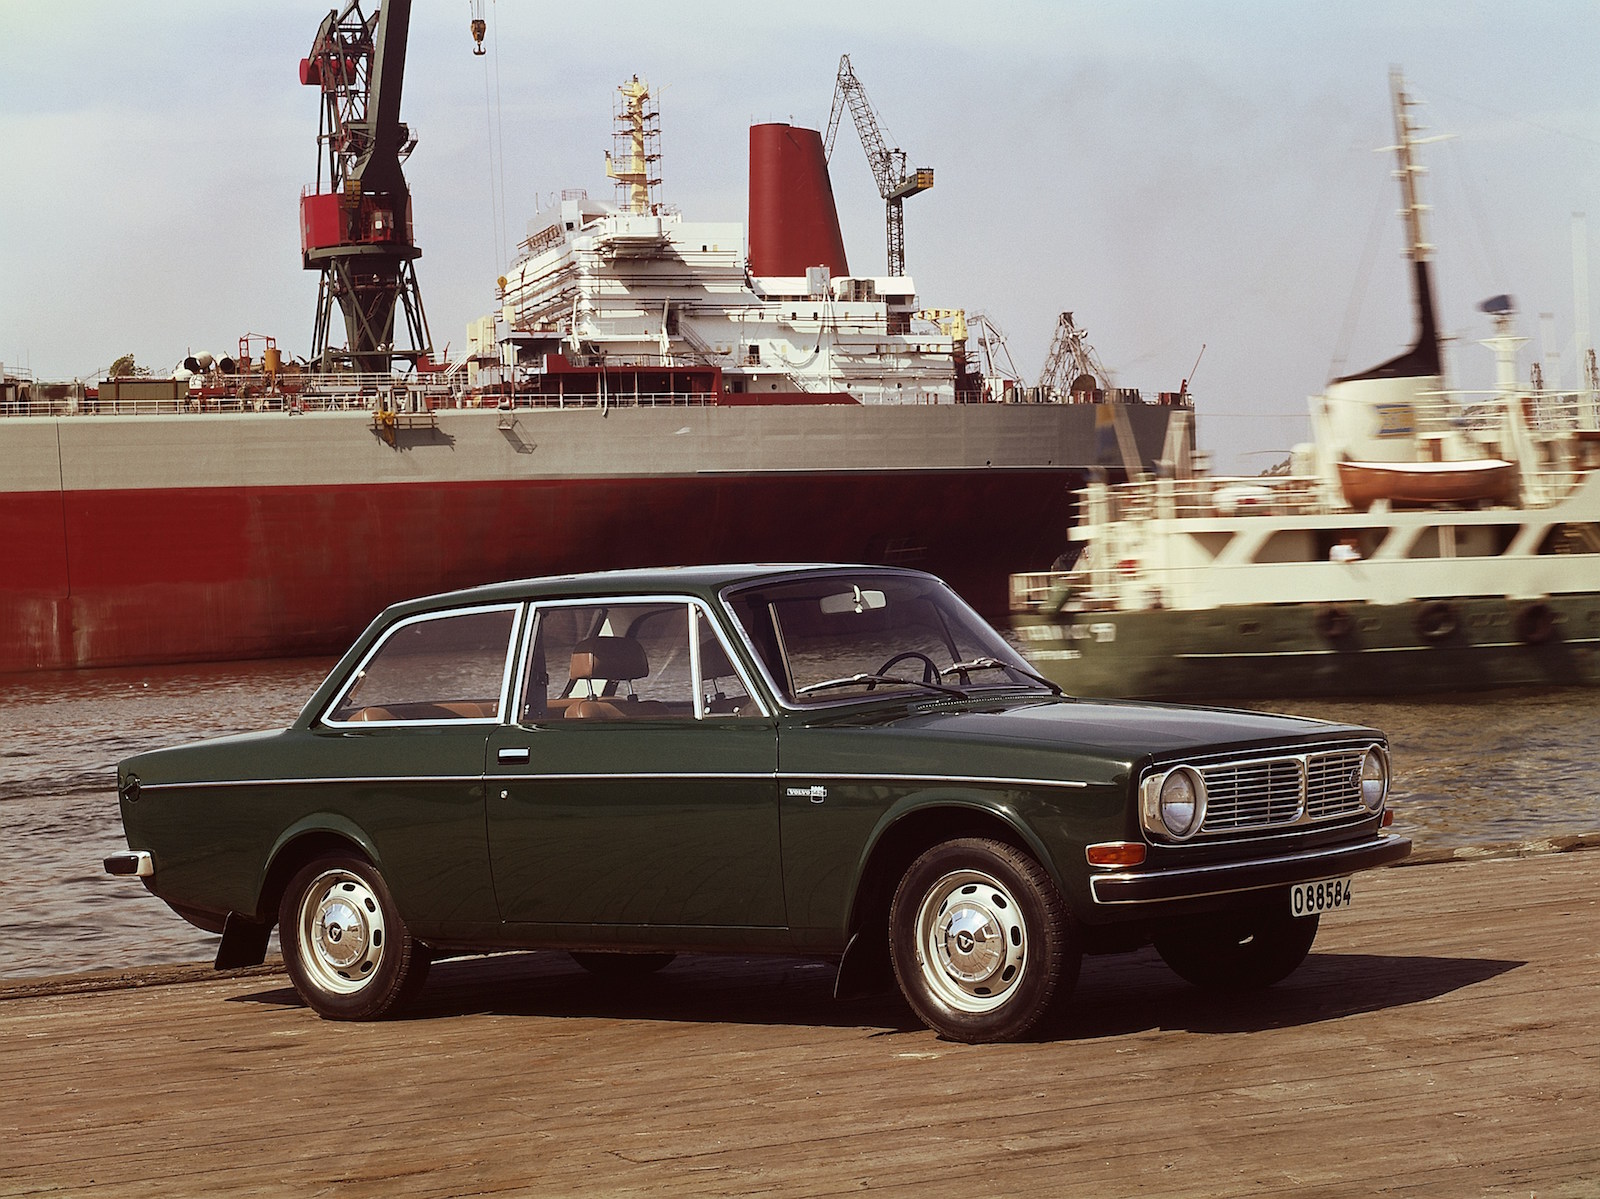 Volvo 144 celebrates 50th anniversary, was company’s first million seller